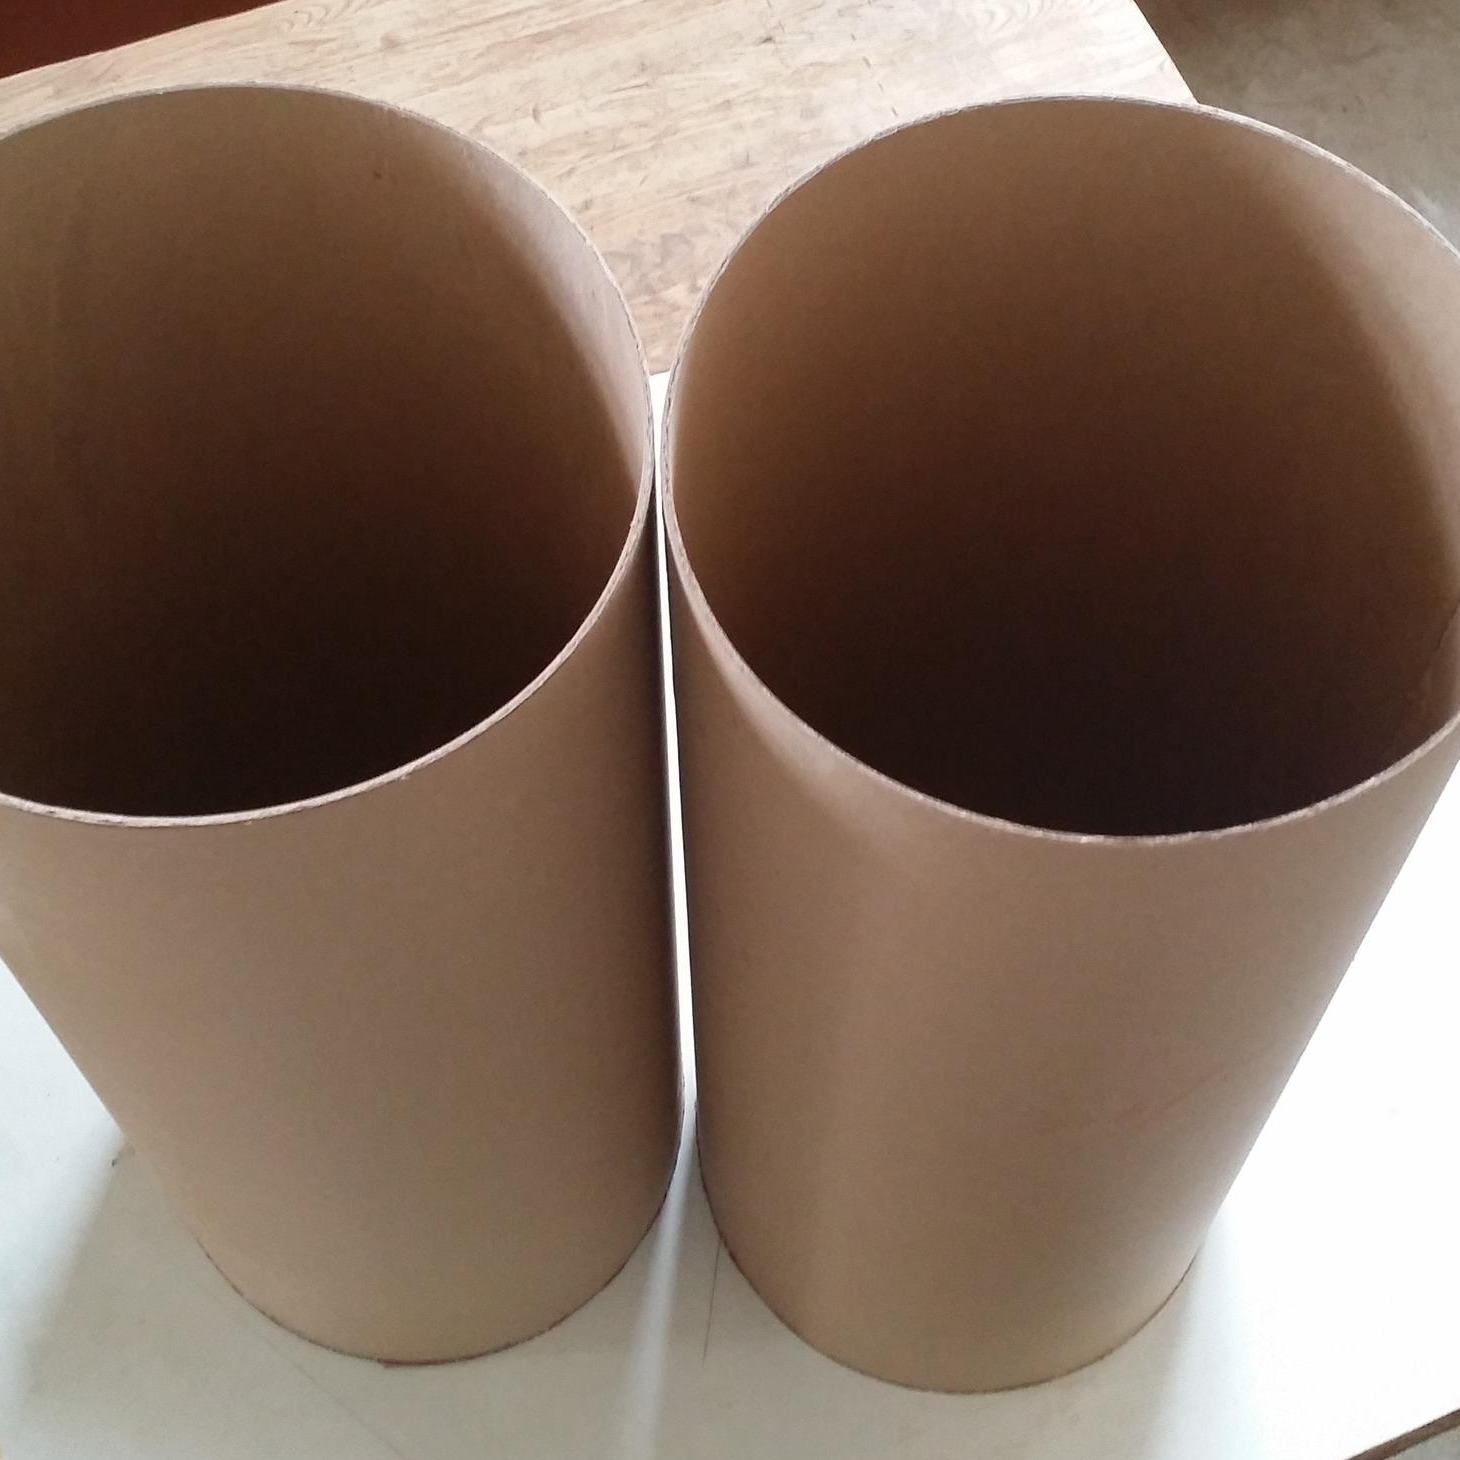 T4硬纸板筒 其他绝缘材料 绝缘材料绝缘纸筒 T4纸筒 绝缘纸板筒